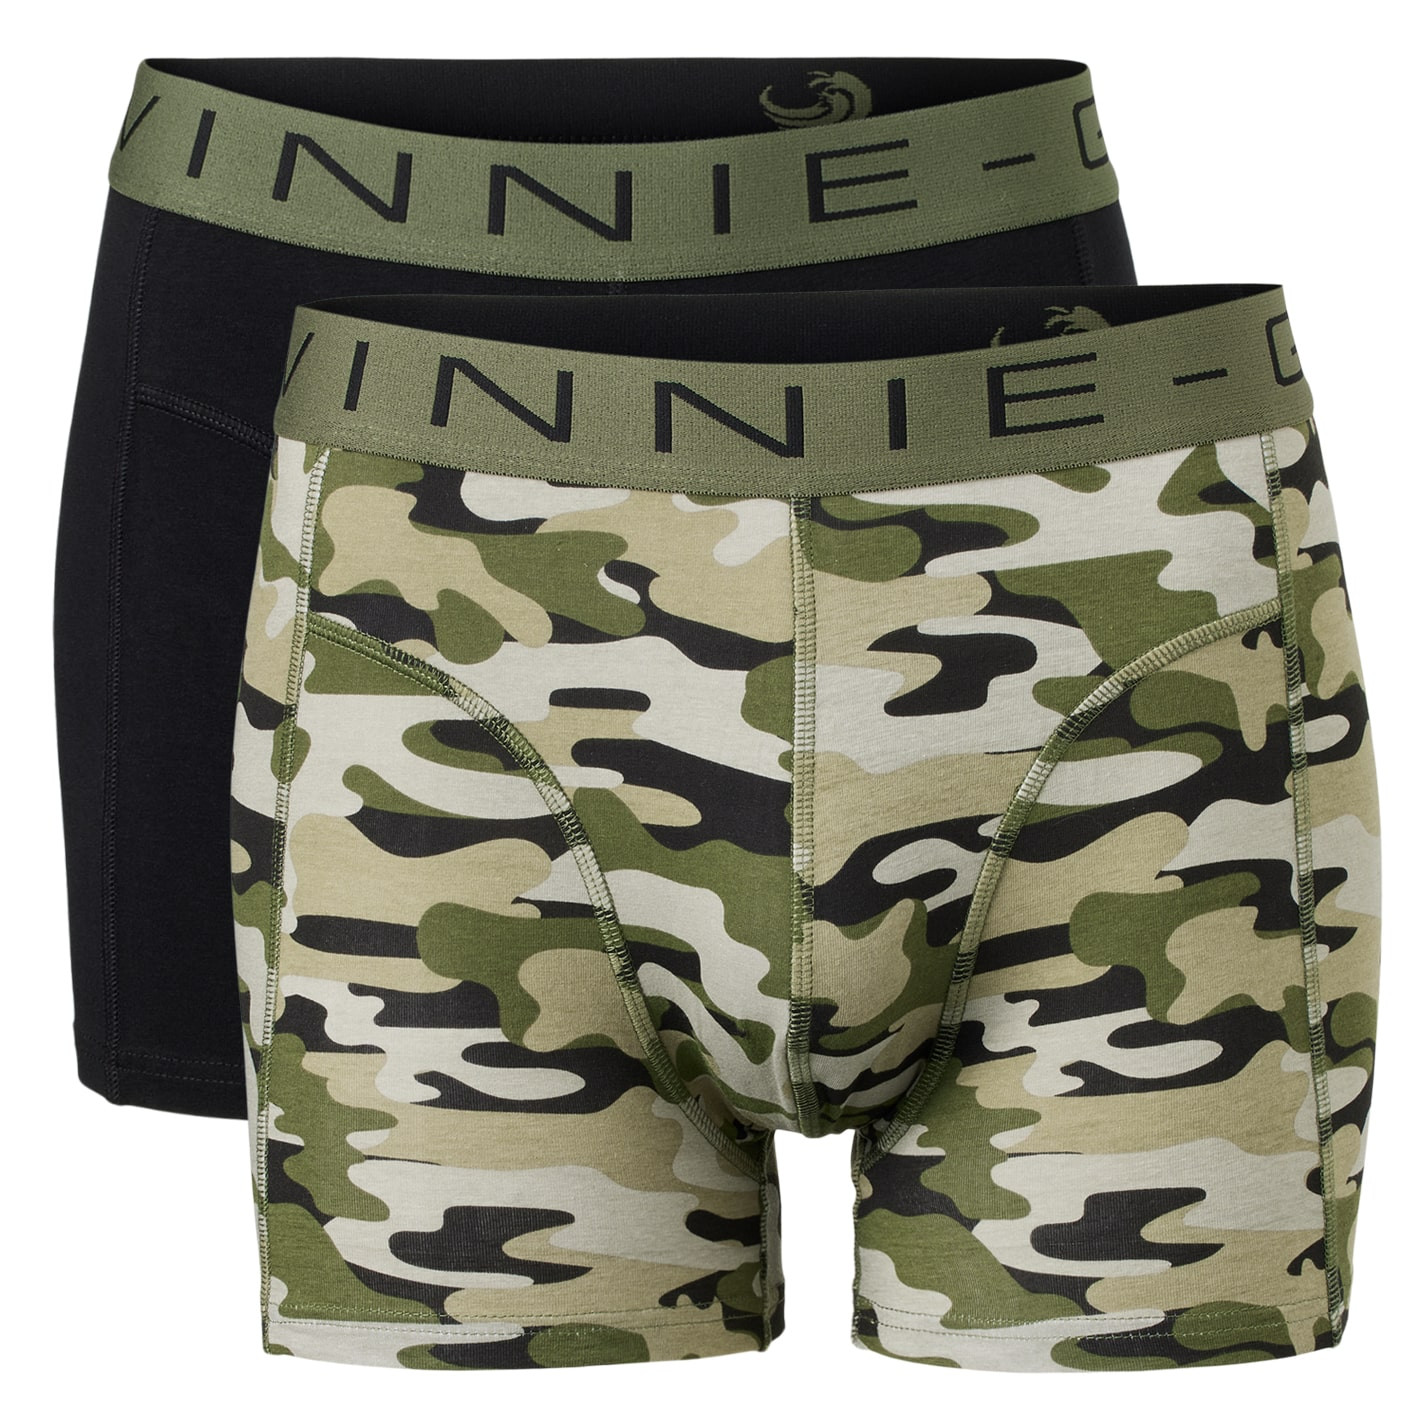 Vinnie-G Boxershorts 2-pack Black / Army Green Combo-XL